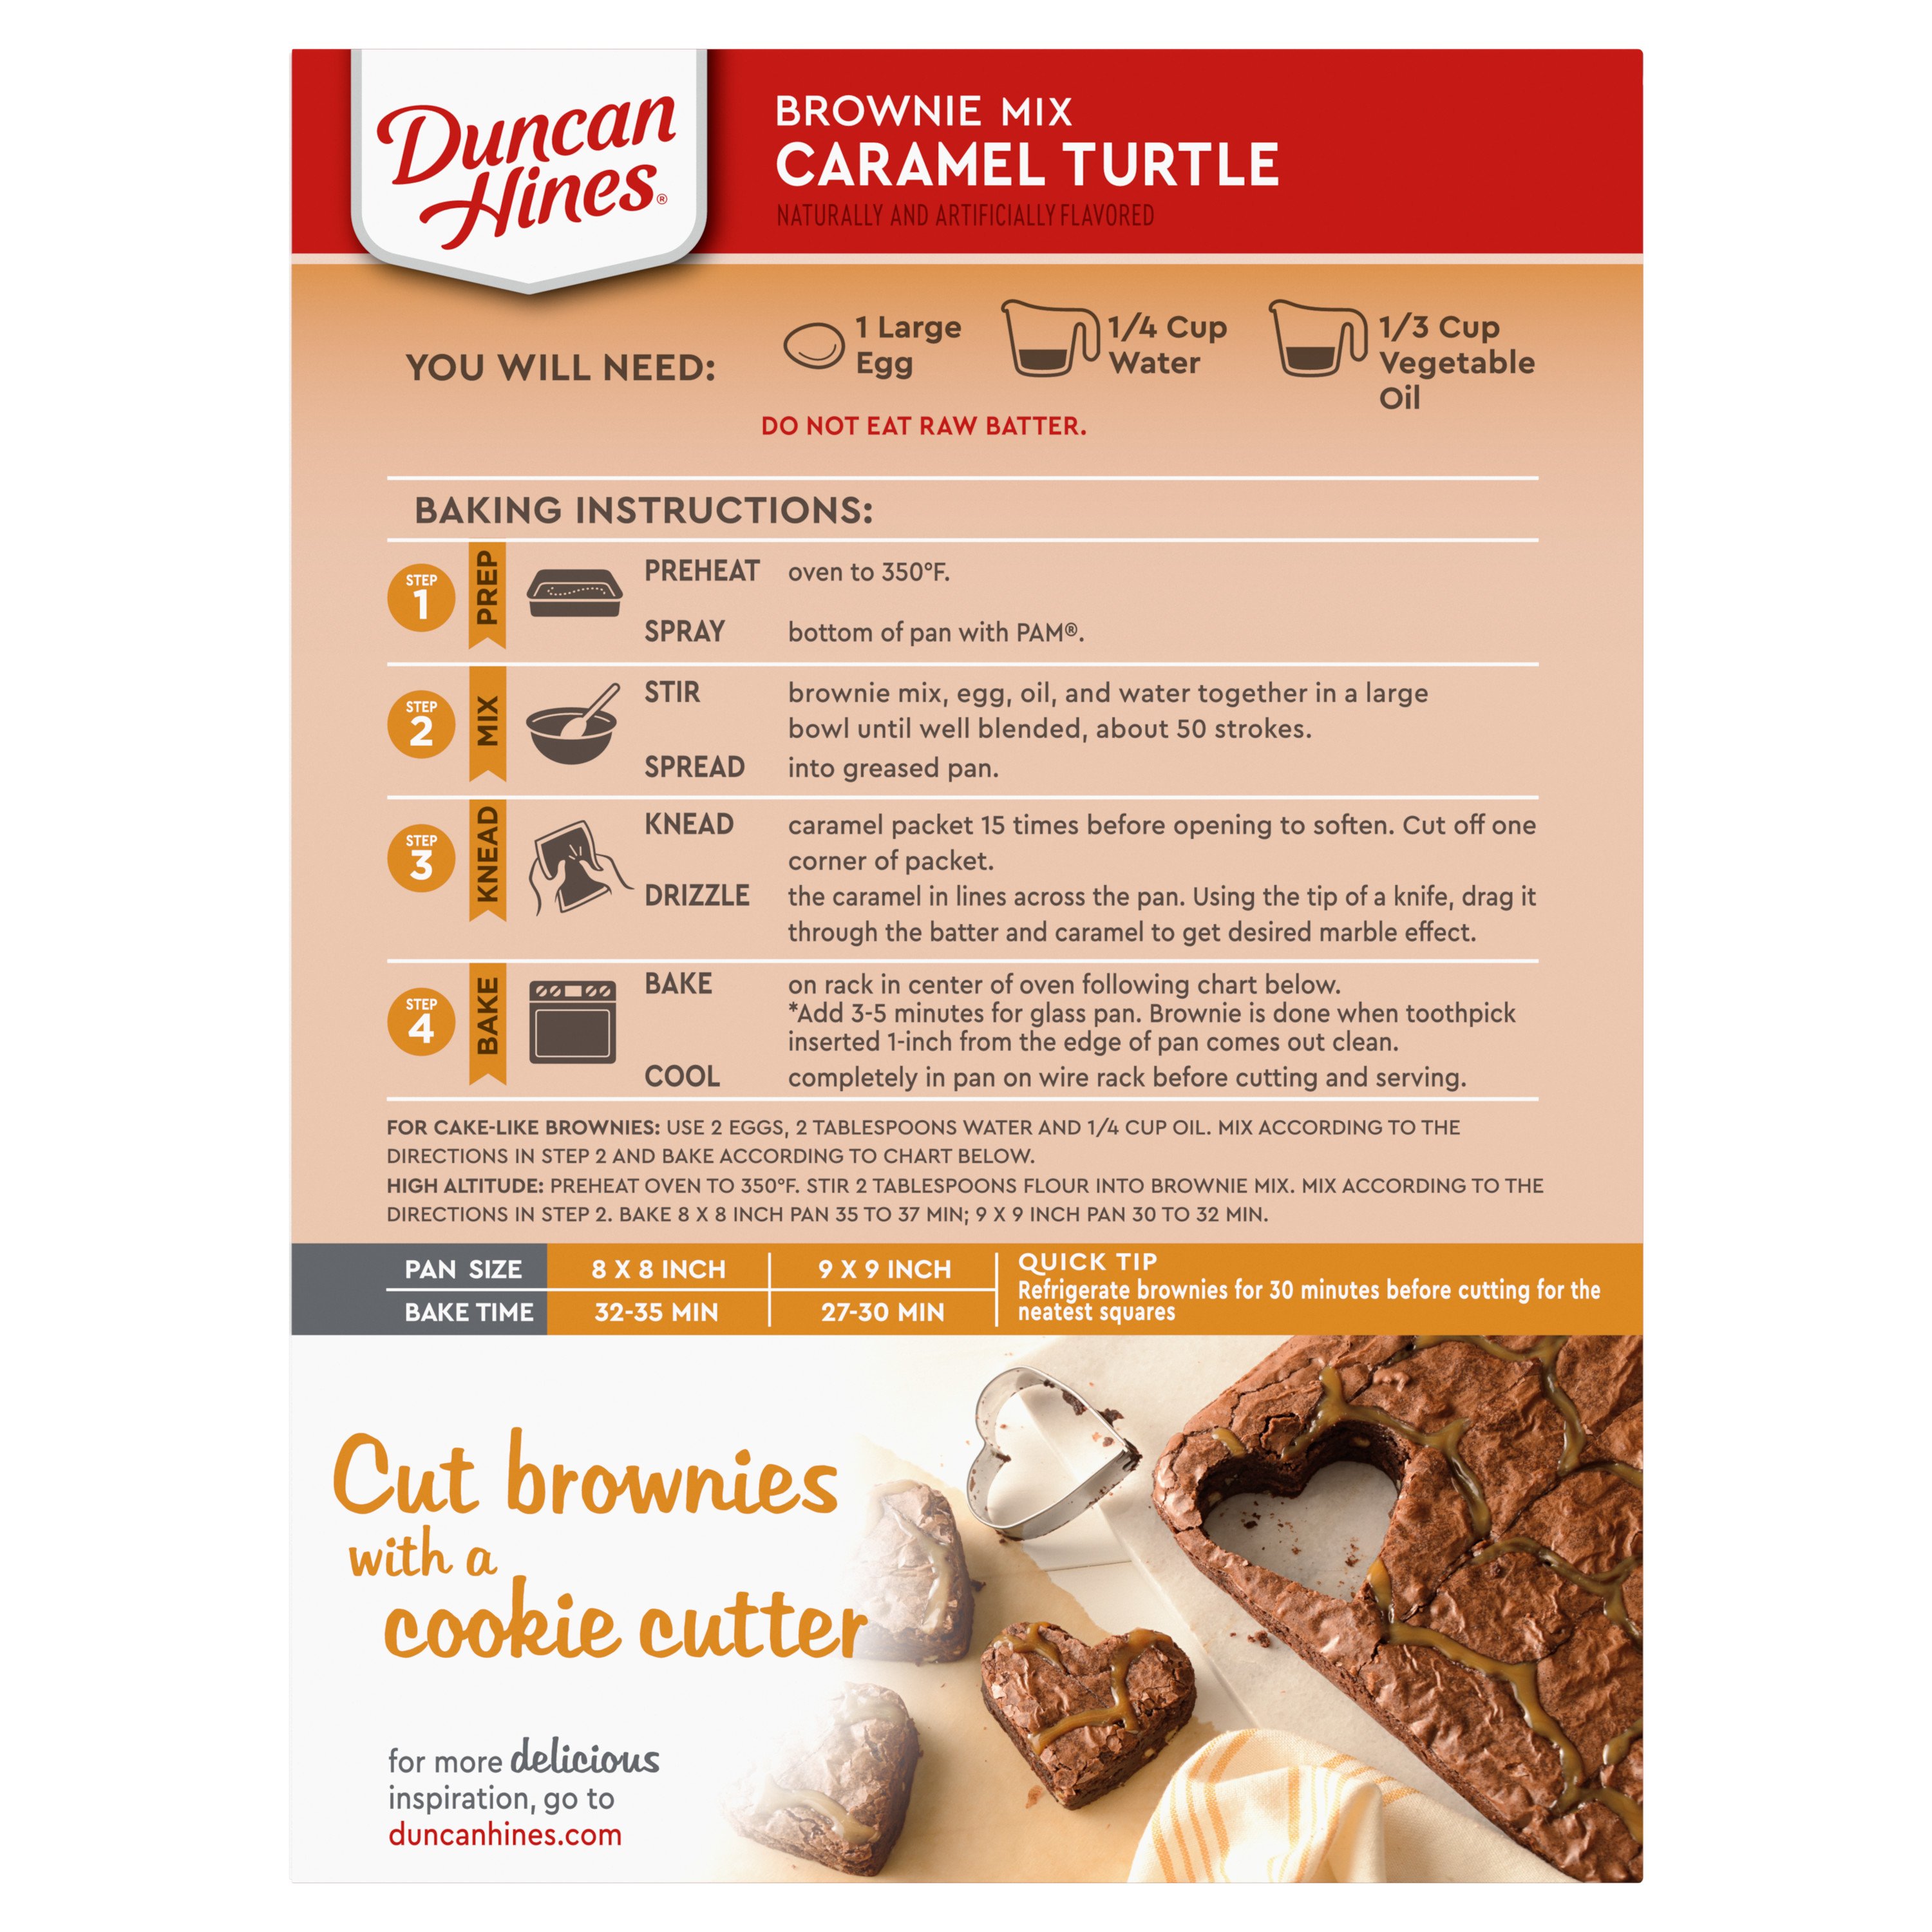 Duncan Hines Signature Caramel Turtle Brownie Mix